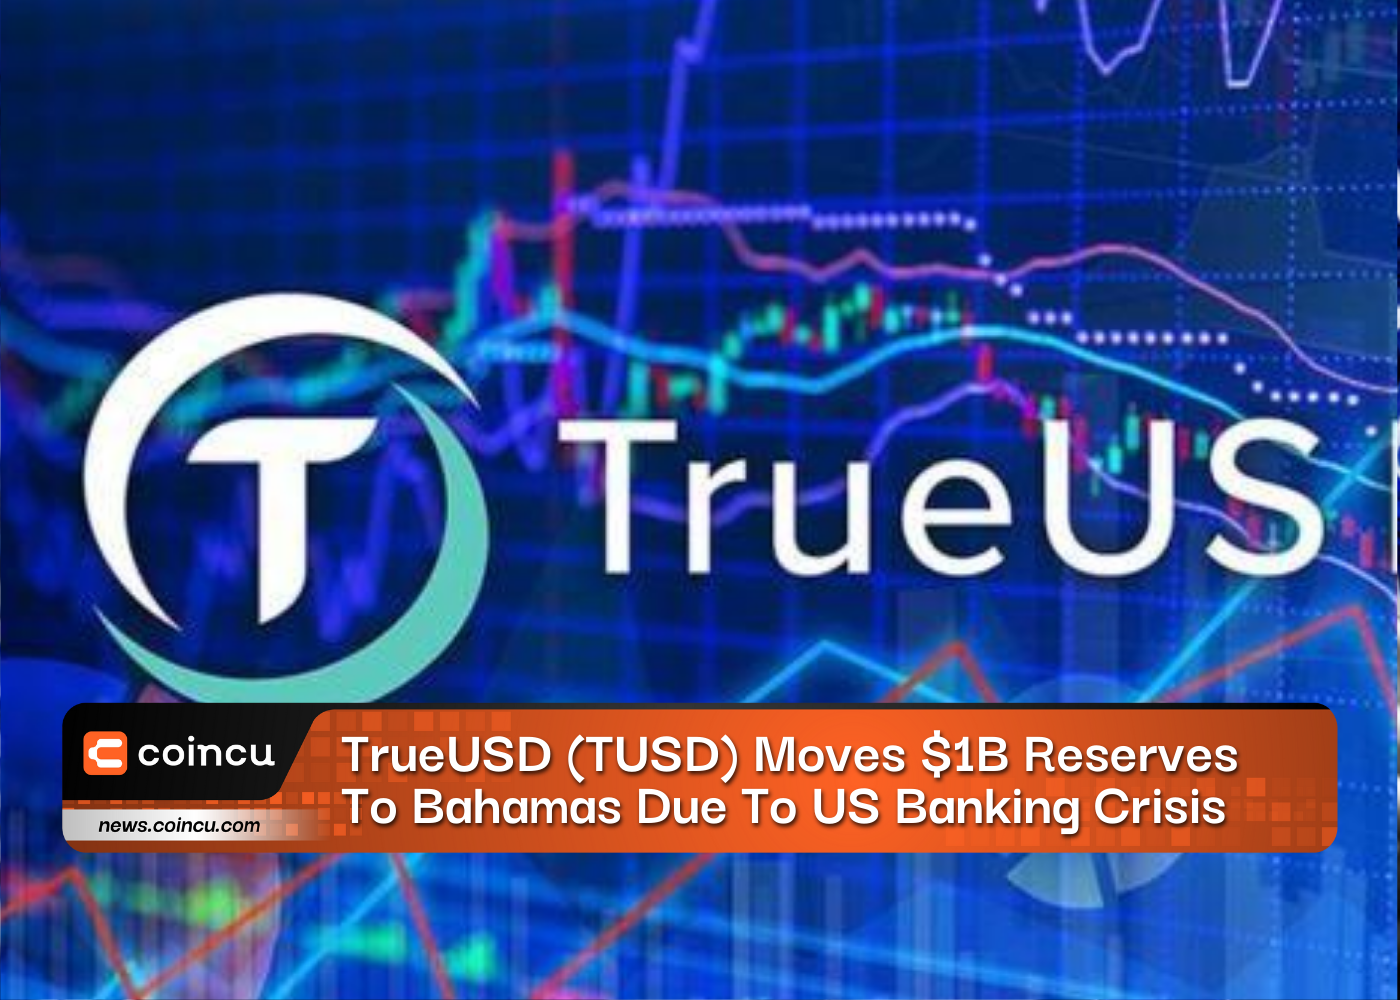 TrueUSD(TUSD), 미국 은행 위기로 인해 1억 달러의 준비금을 바하마로 이전